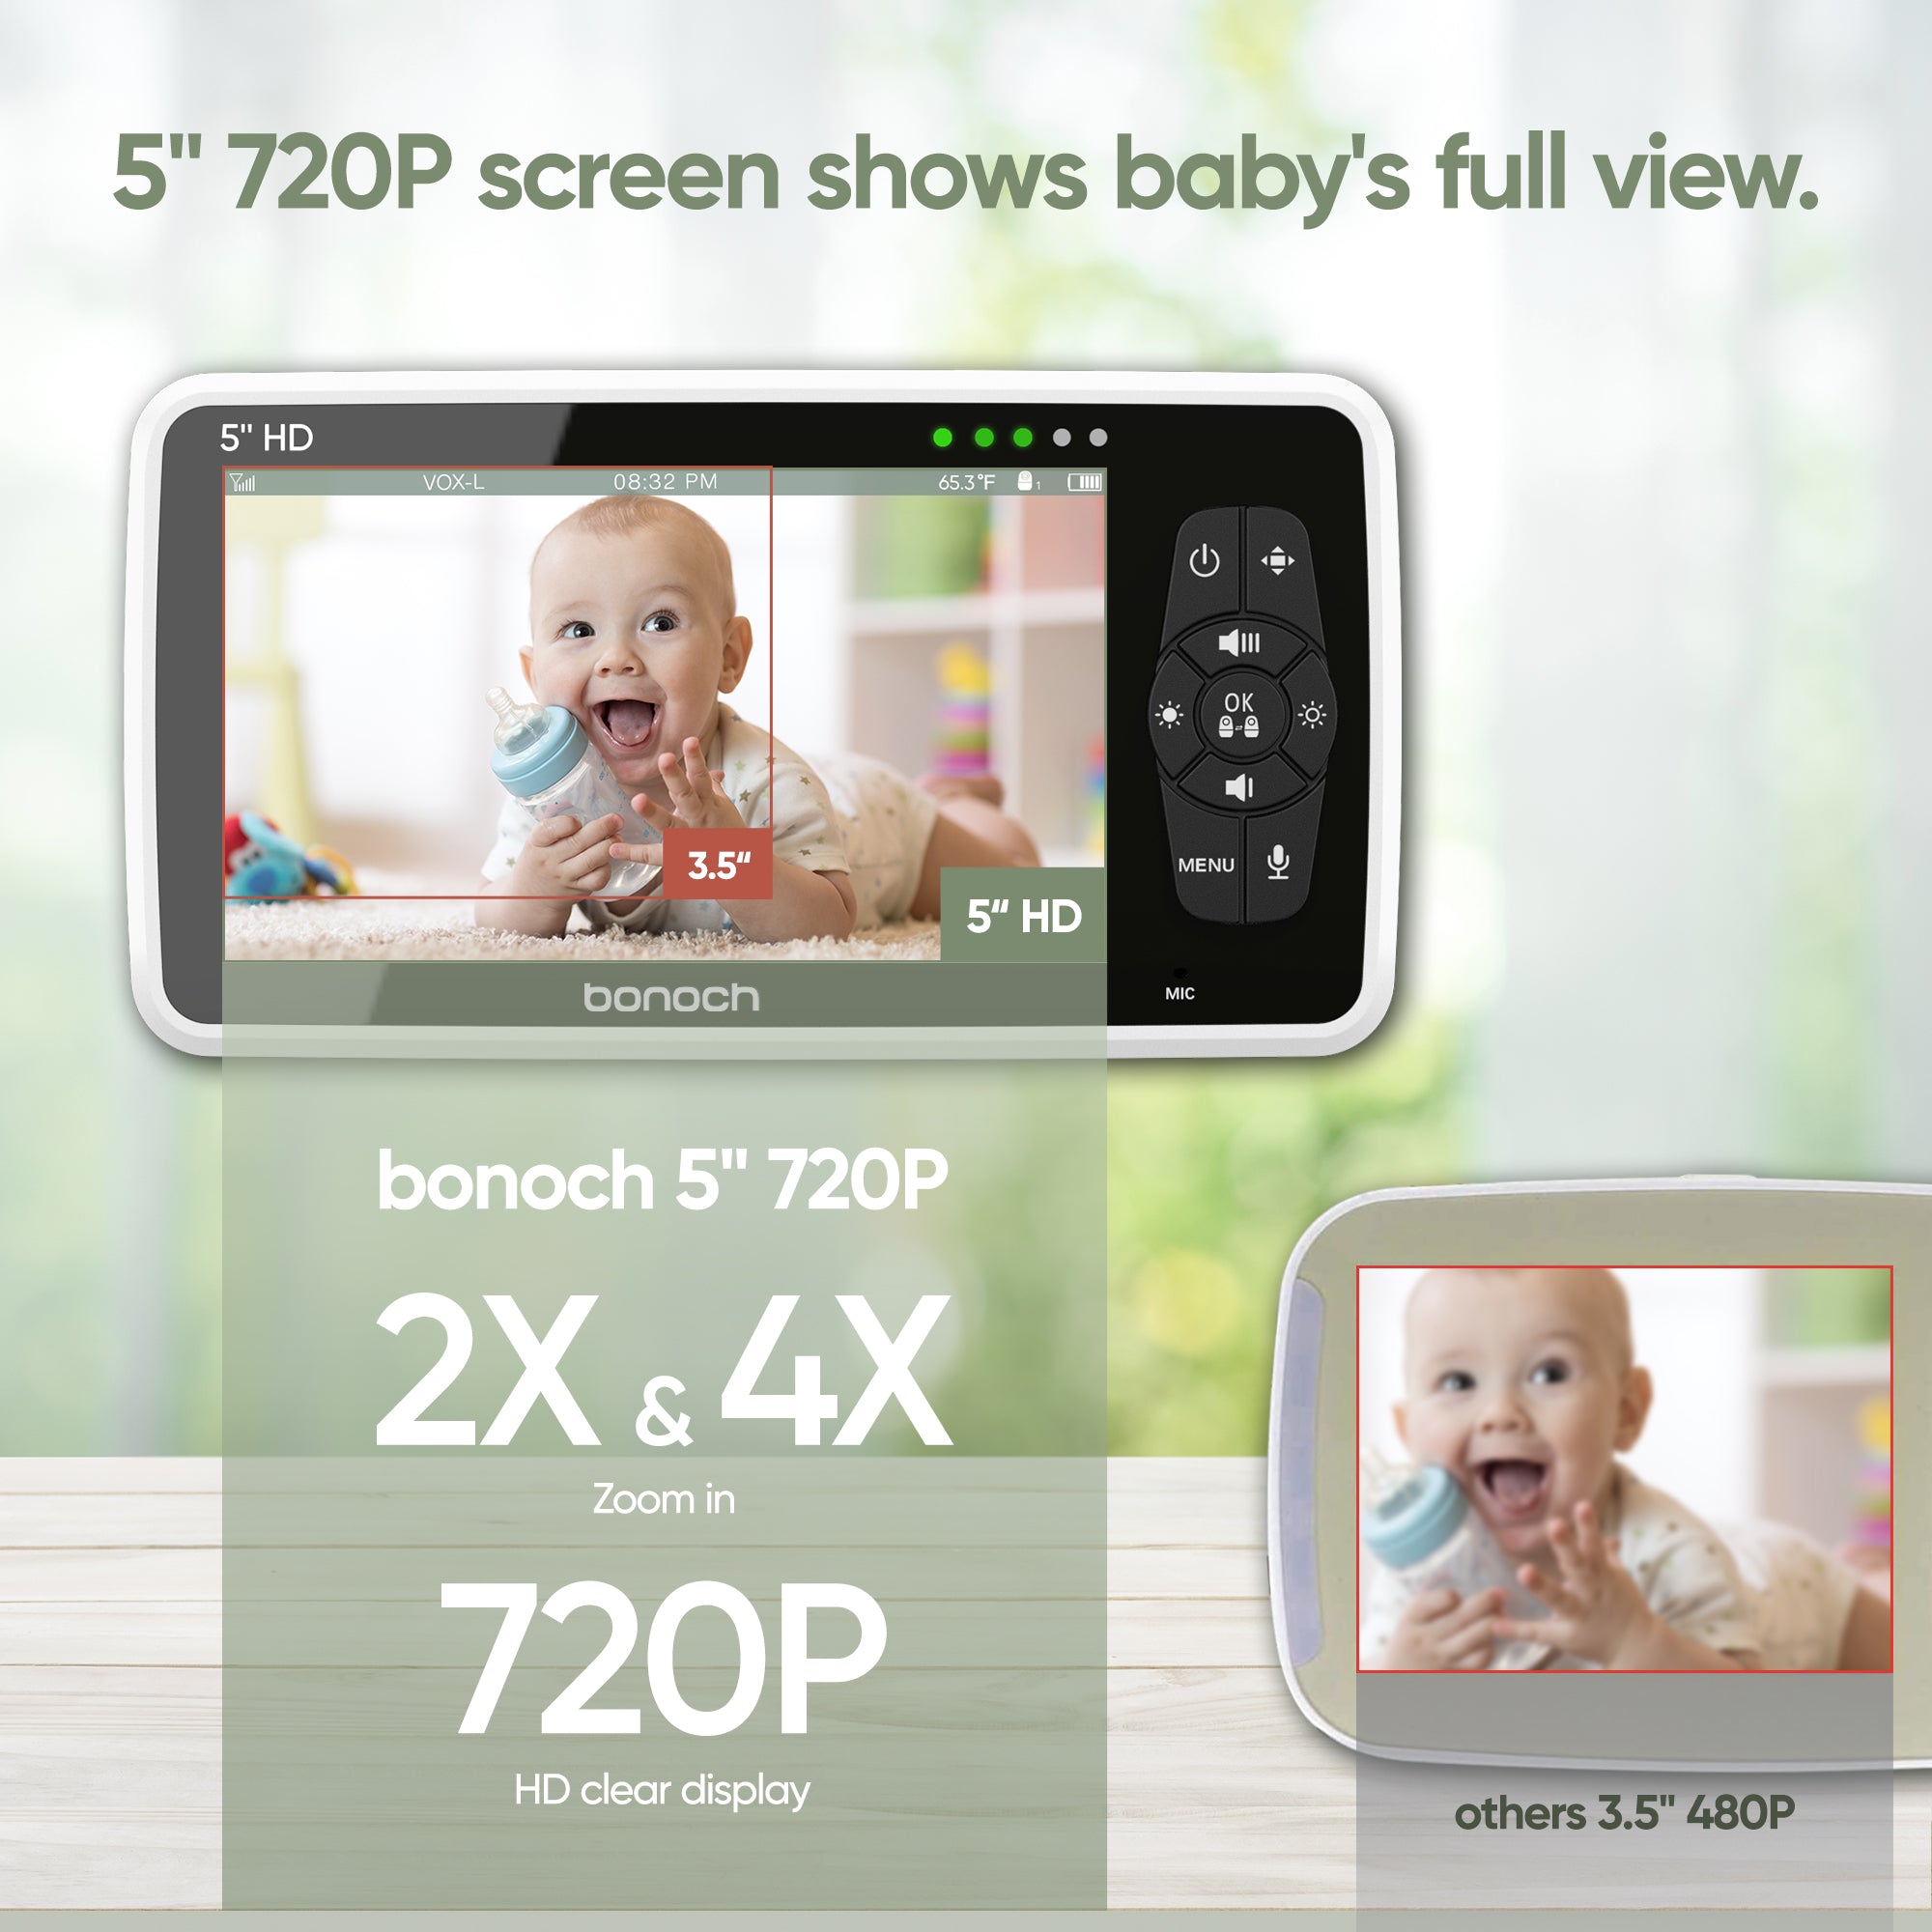 bonoch 5' 720p screen show baby's full view